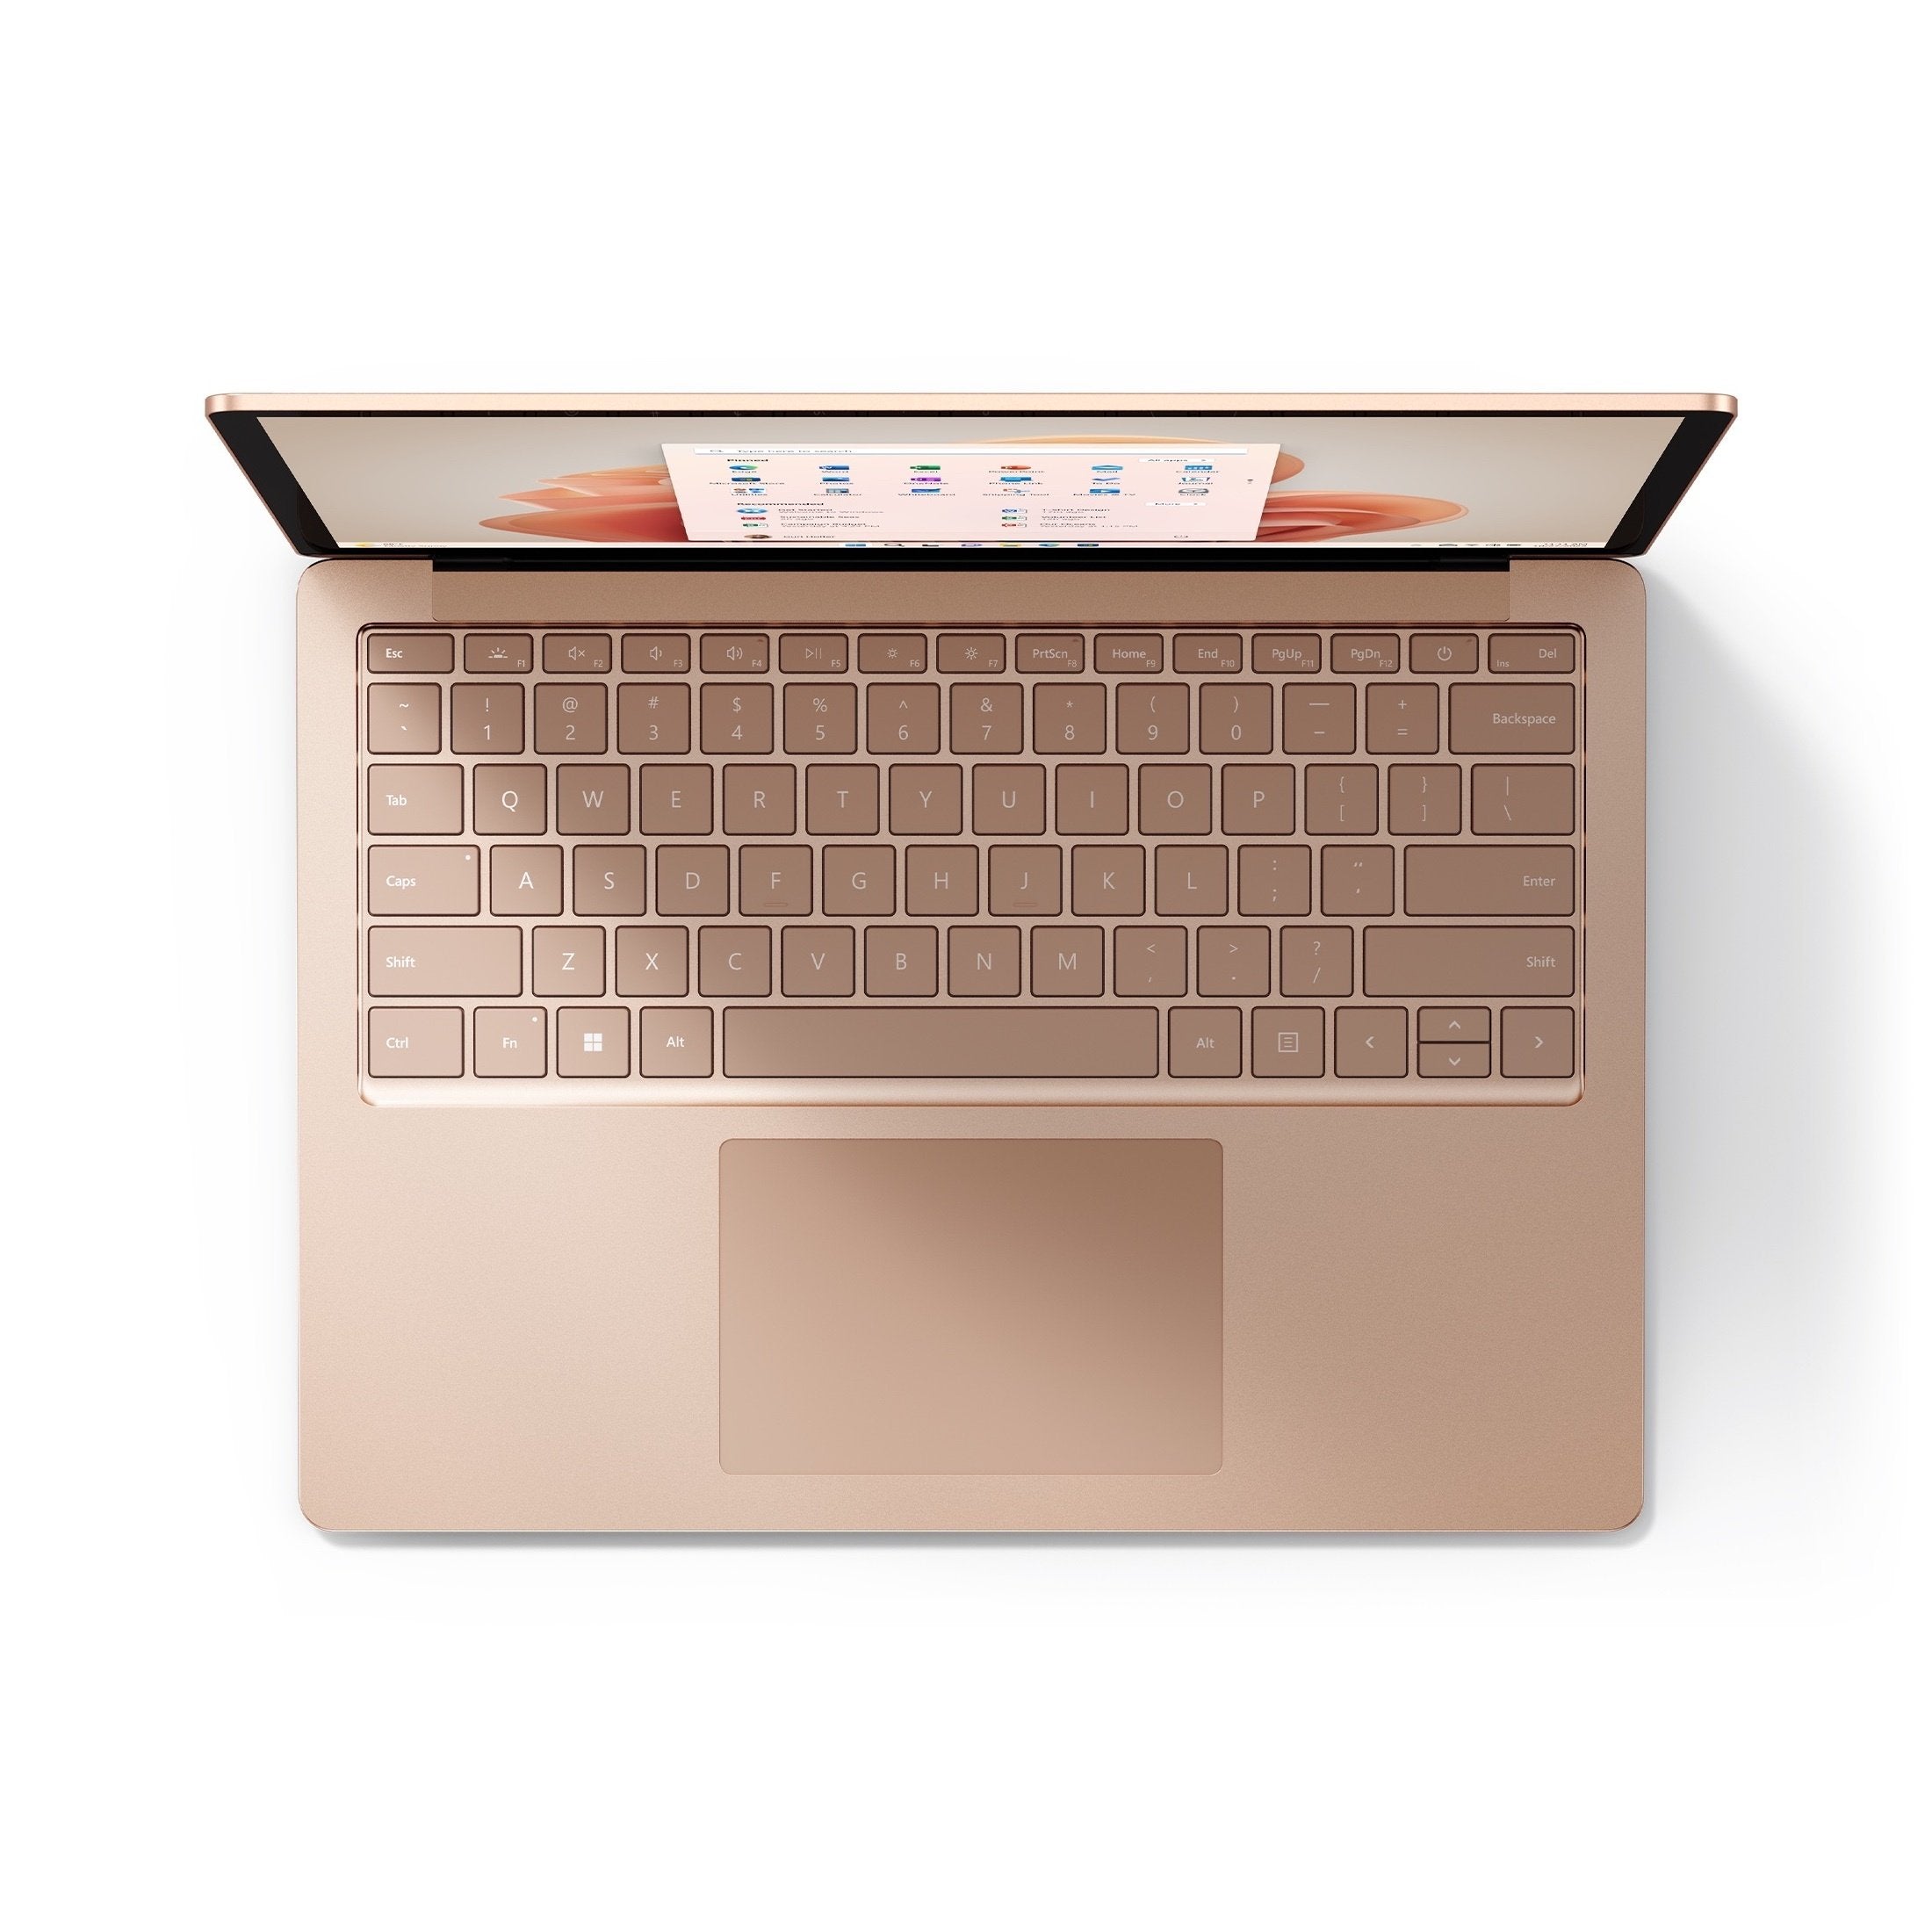 Surface Laptop 3 13.5" (Model 1868) Top Cover and Keyboard - Genuine Sandstone OEM English Keyboard